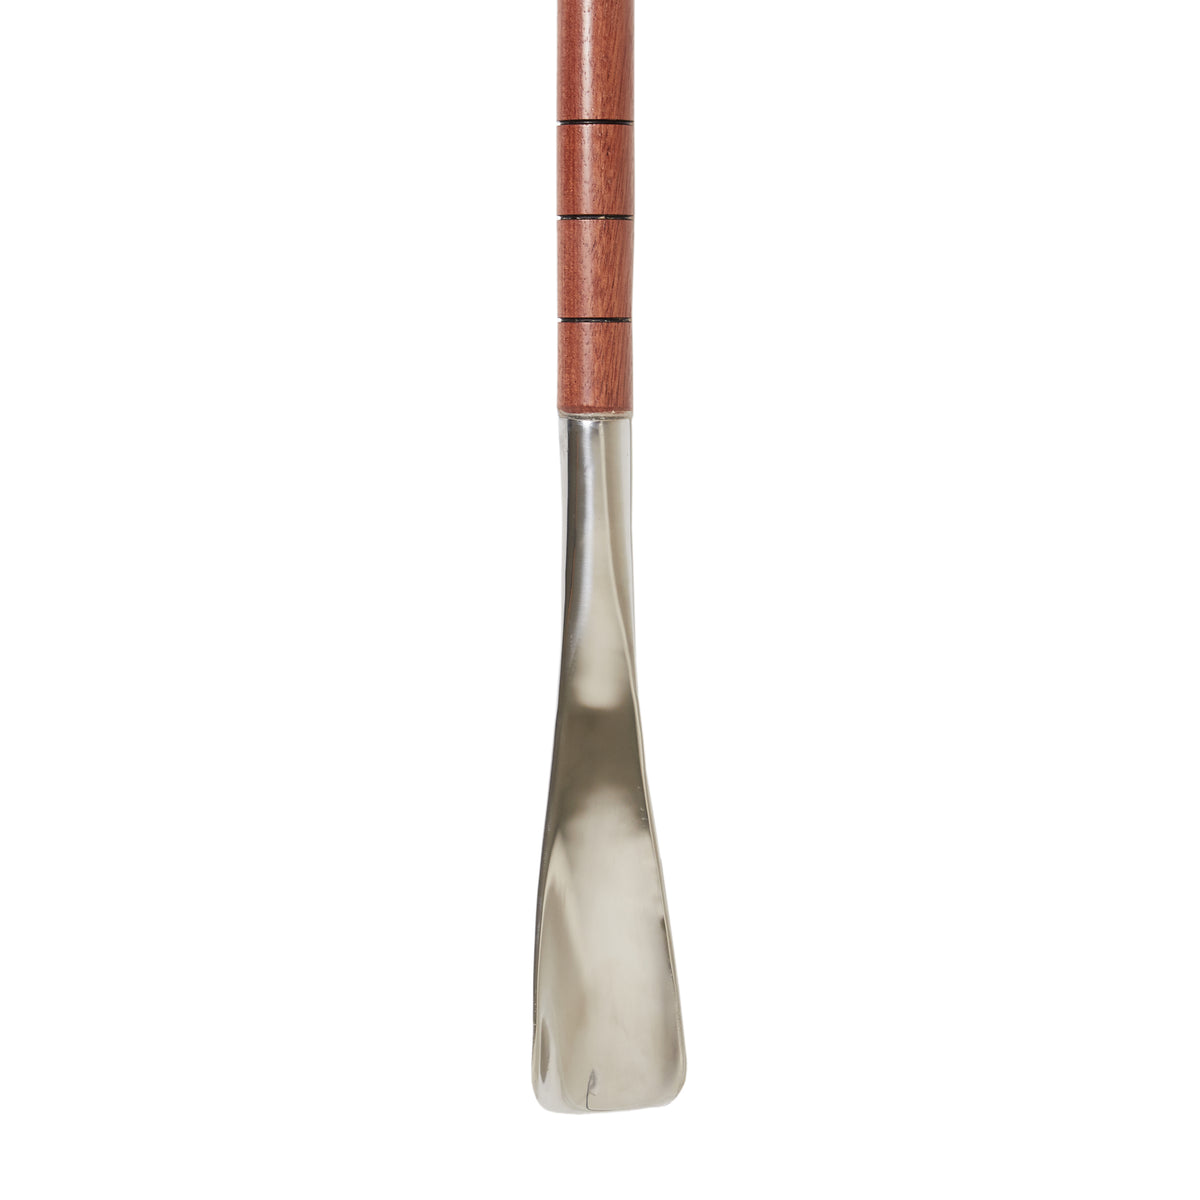 A Hanger Project Bubinga Full-Length Shoe Horn with a KirbyAllison.com wooden handle.